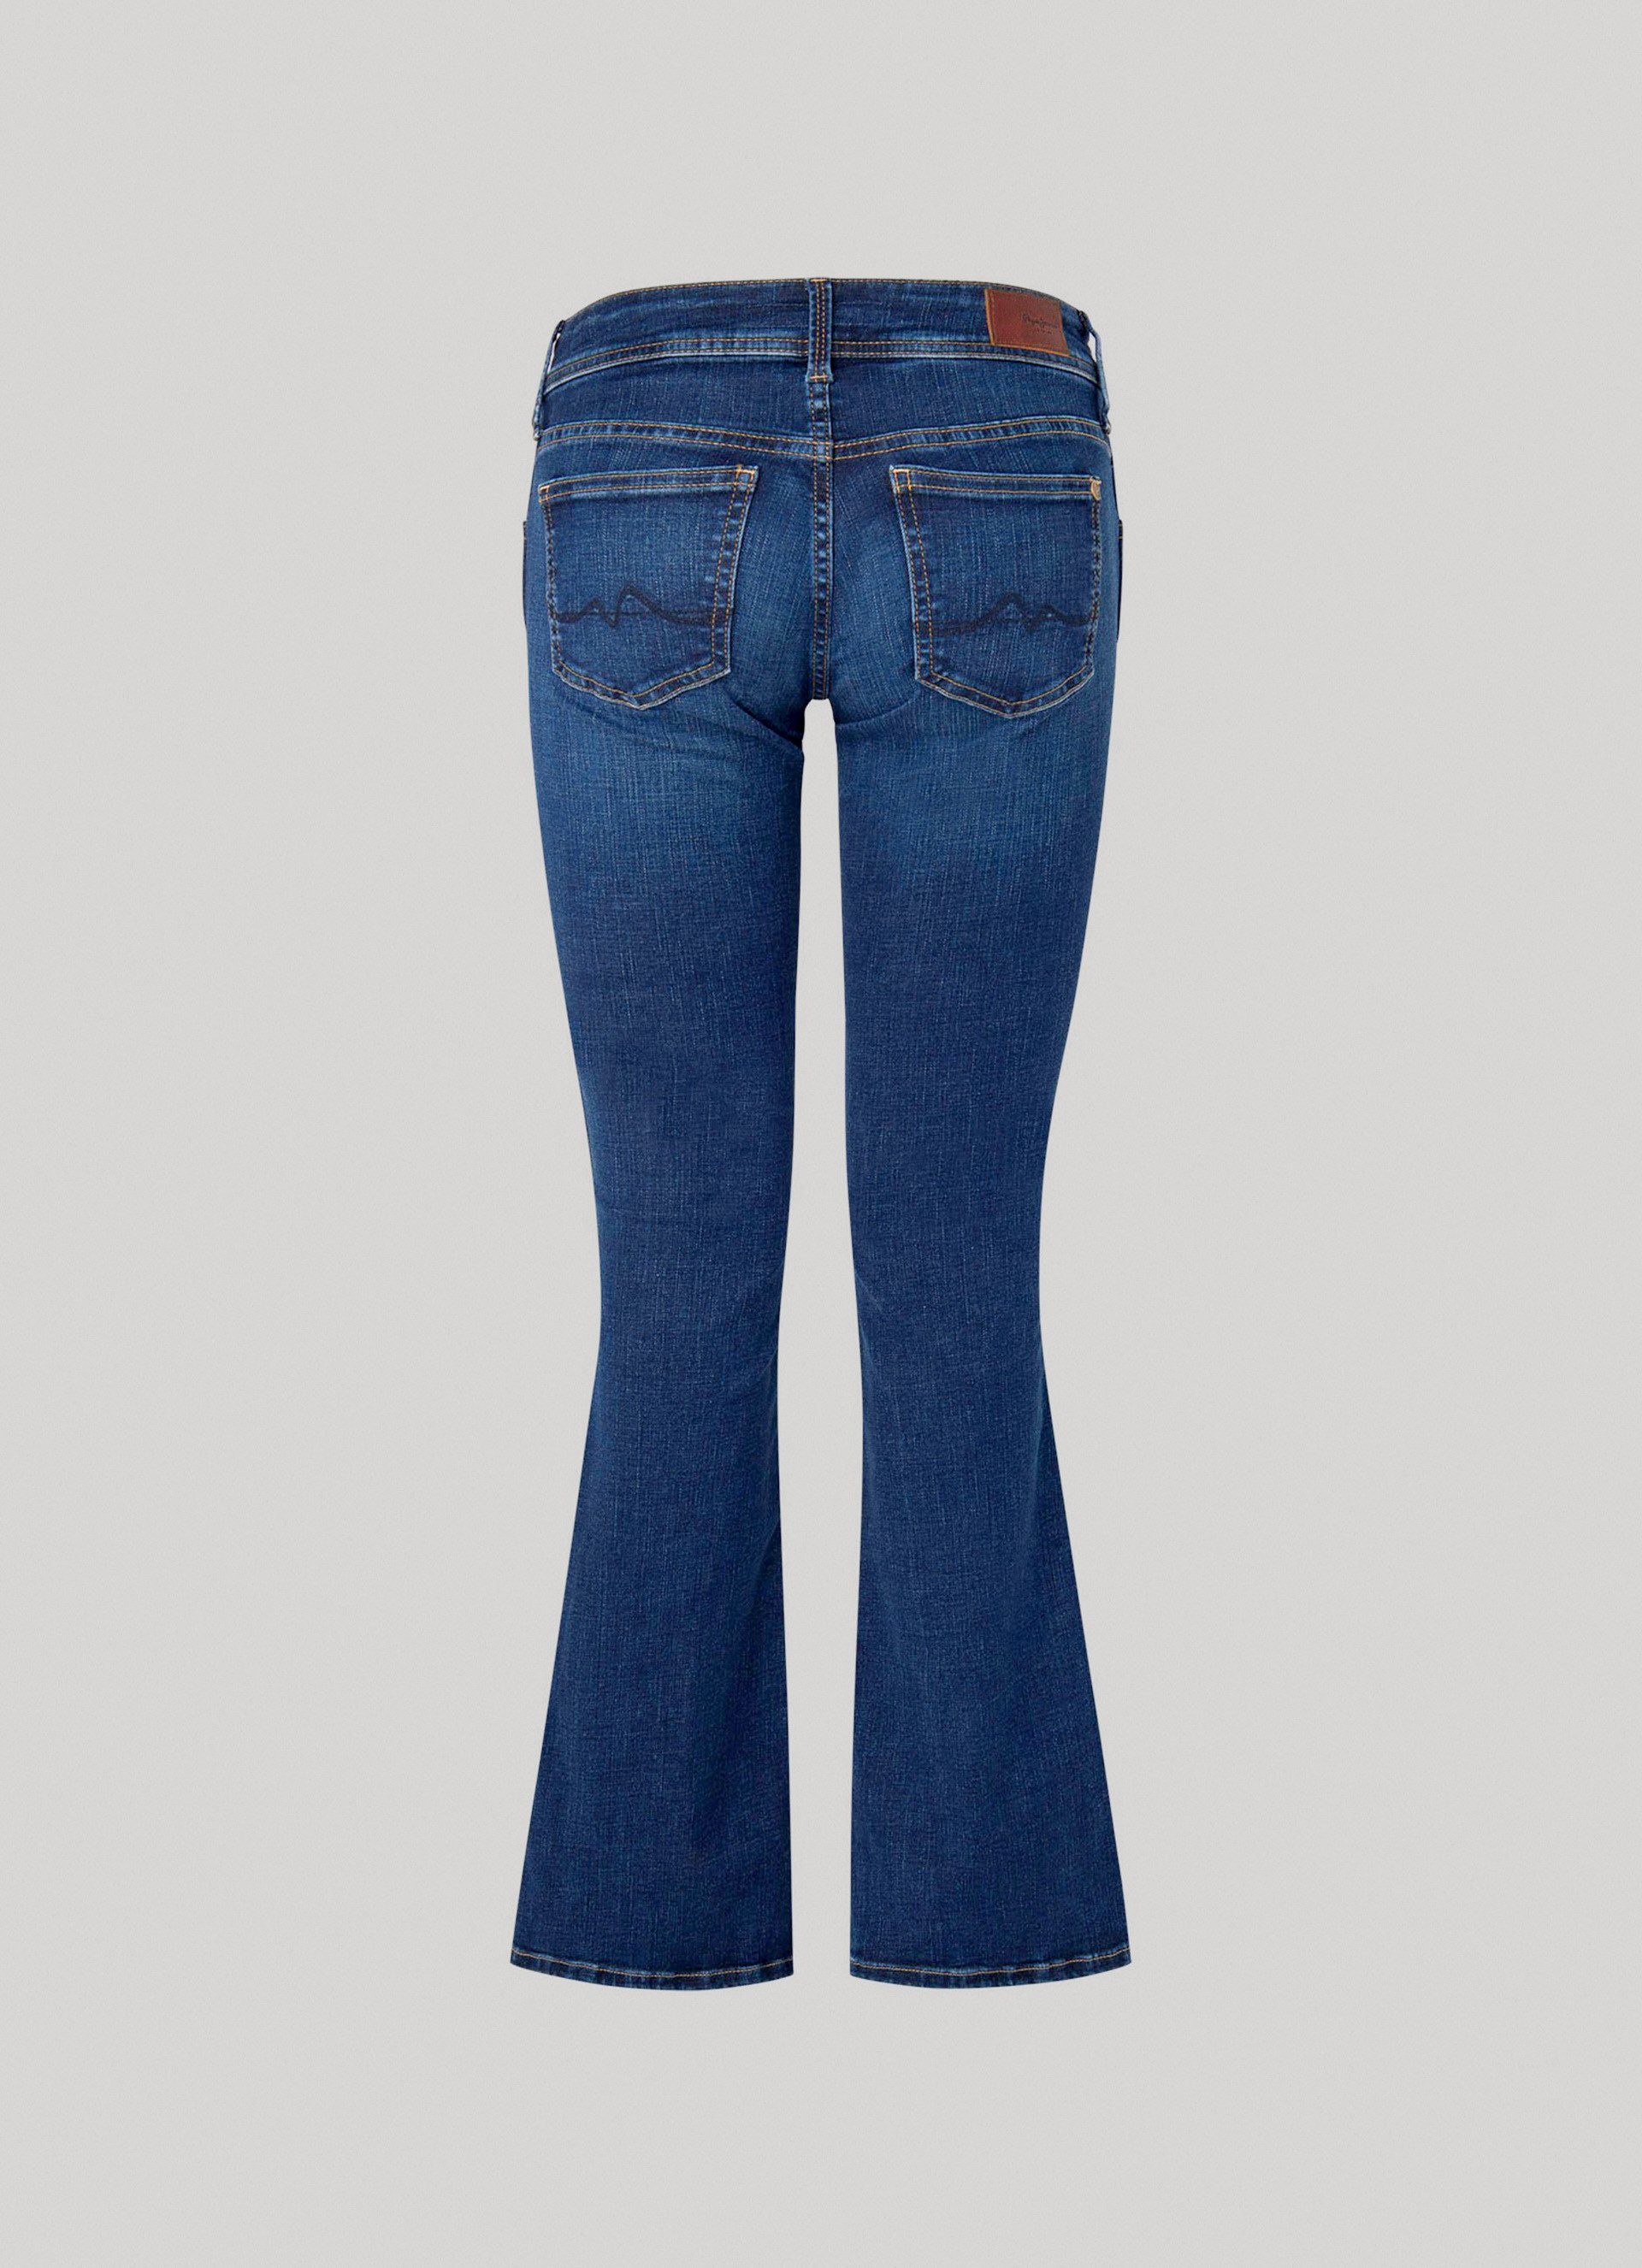 Pepe Jeans Slim fit jeans